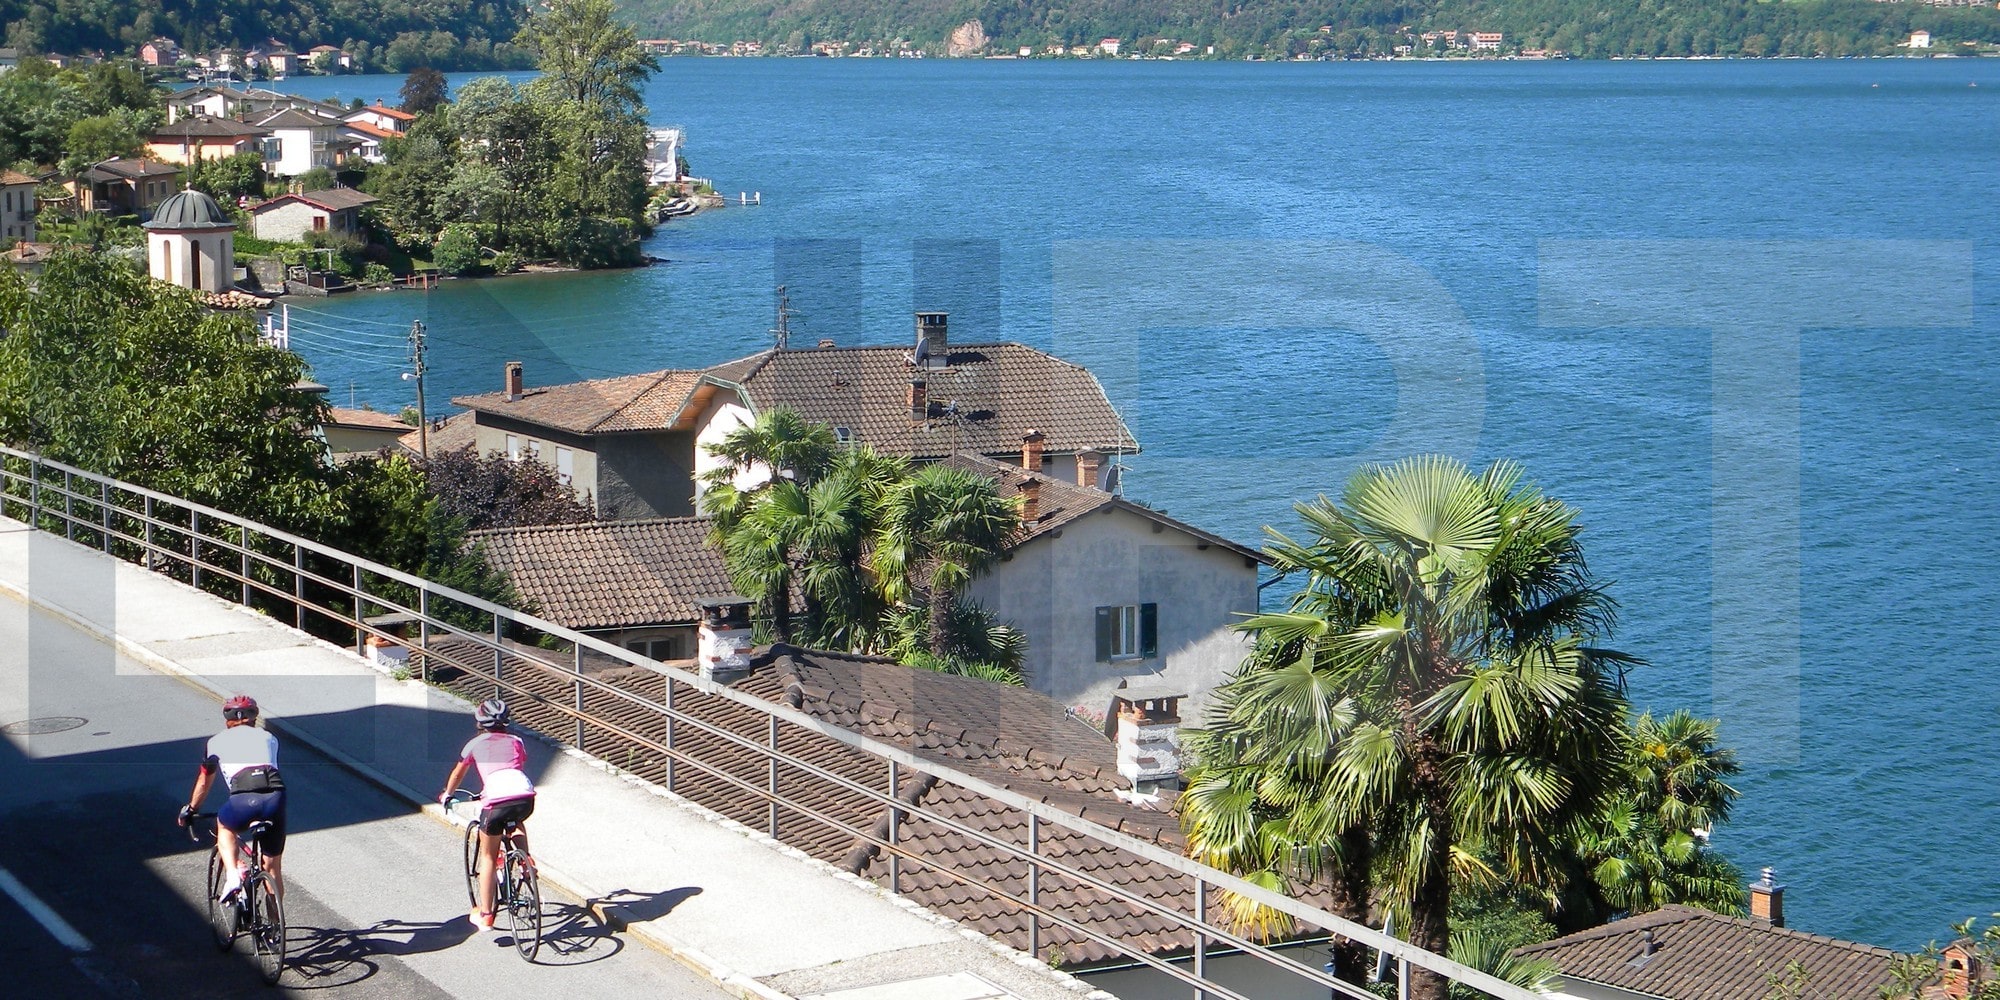 Lake Lugano cycling